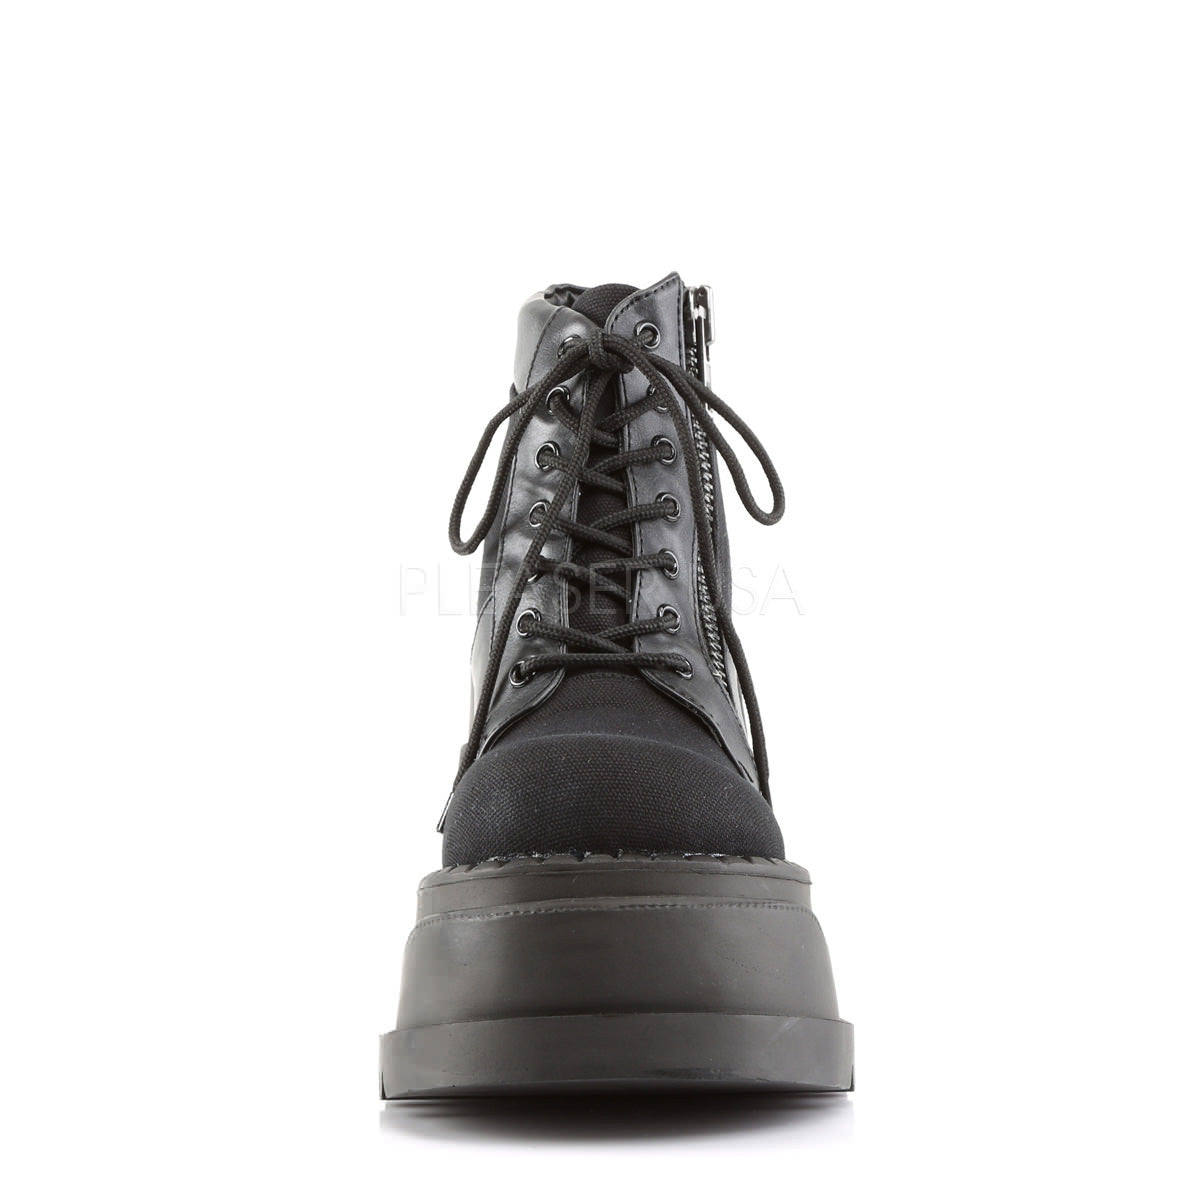 Demonia STOMP-10 Black Canvas-Vegan Leather Boots - Shoecup.com - 4